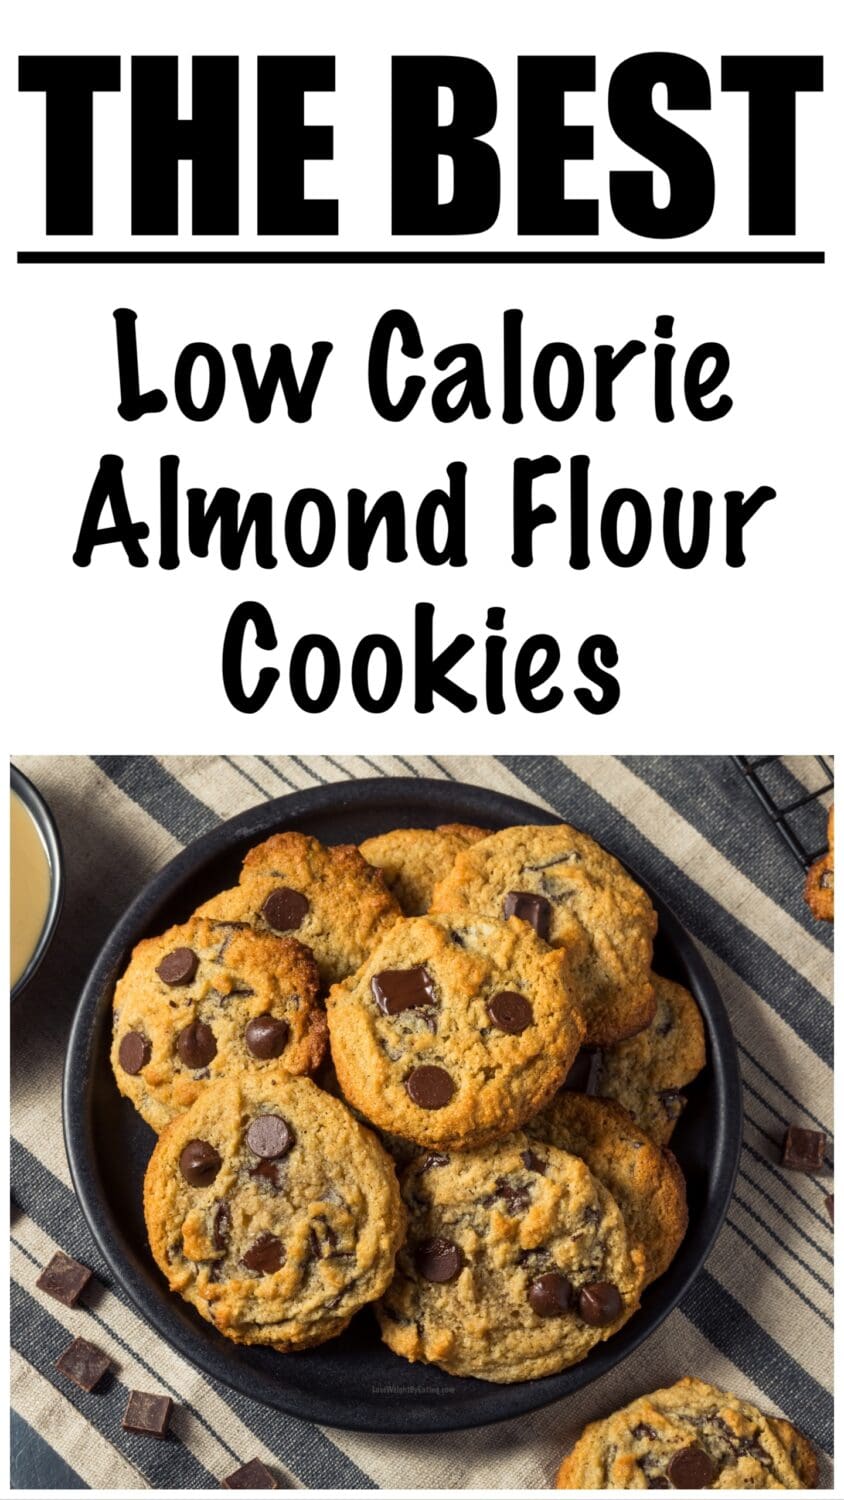 Low Calorie Almond Flour Chocolate Chip Cookies Recipe